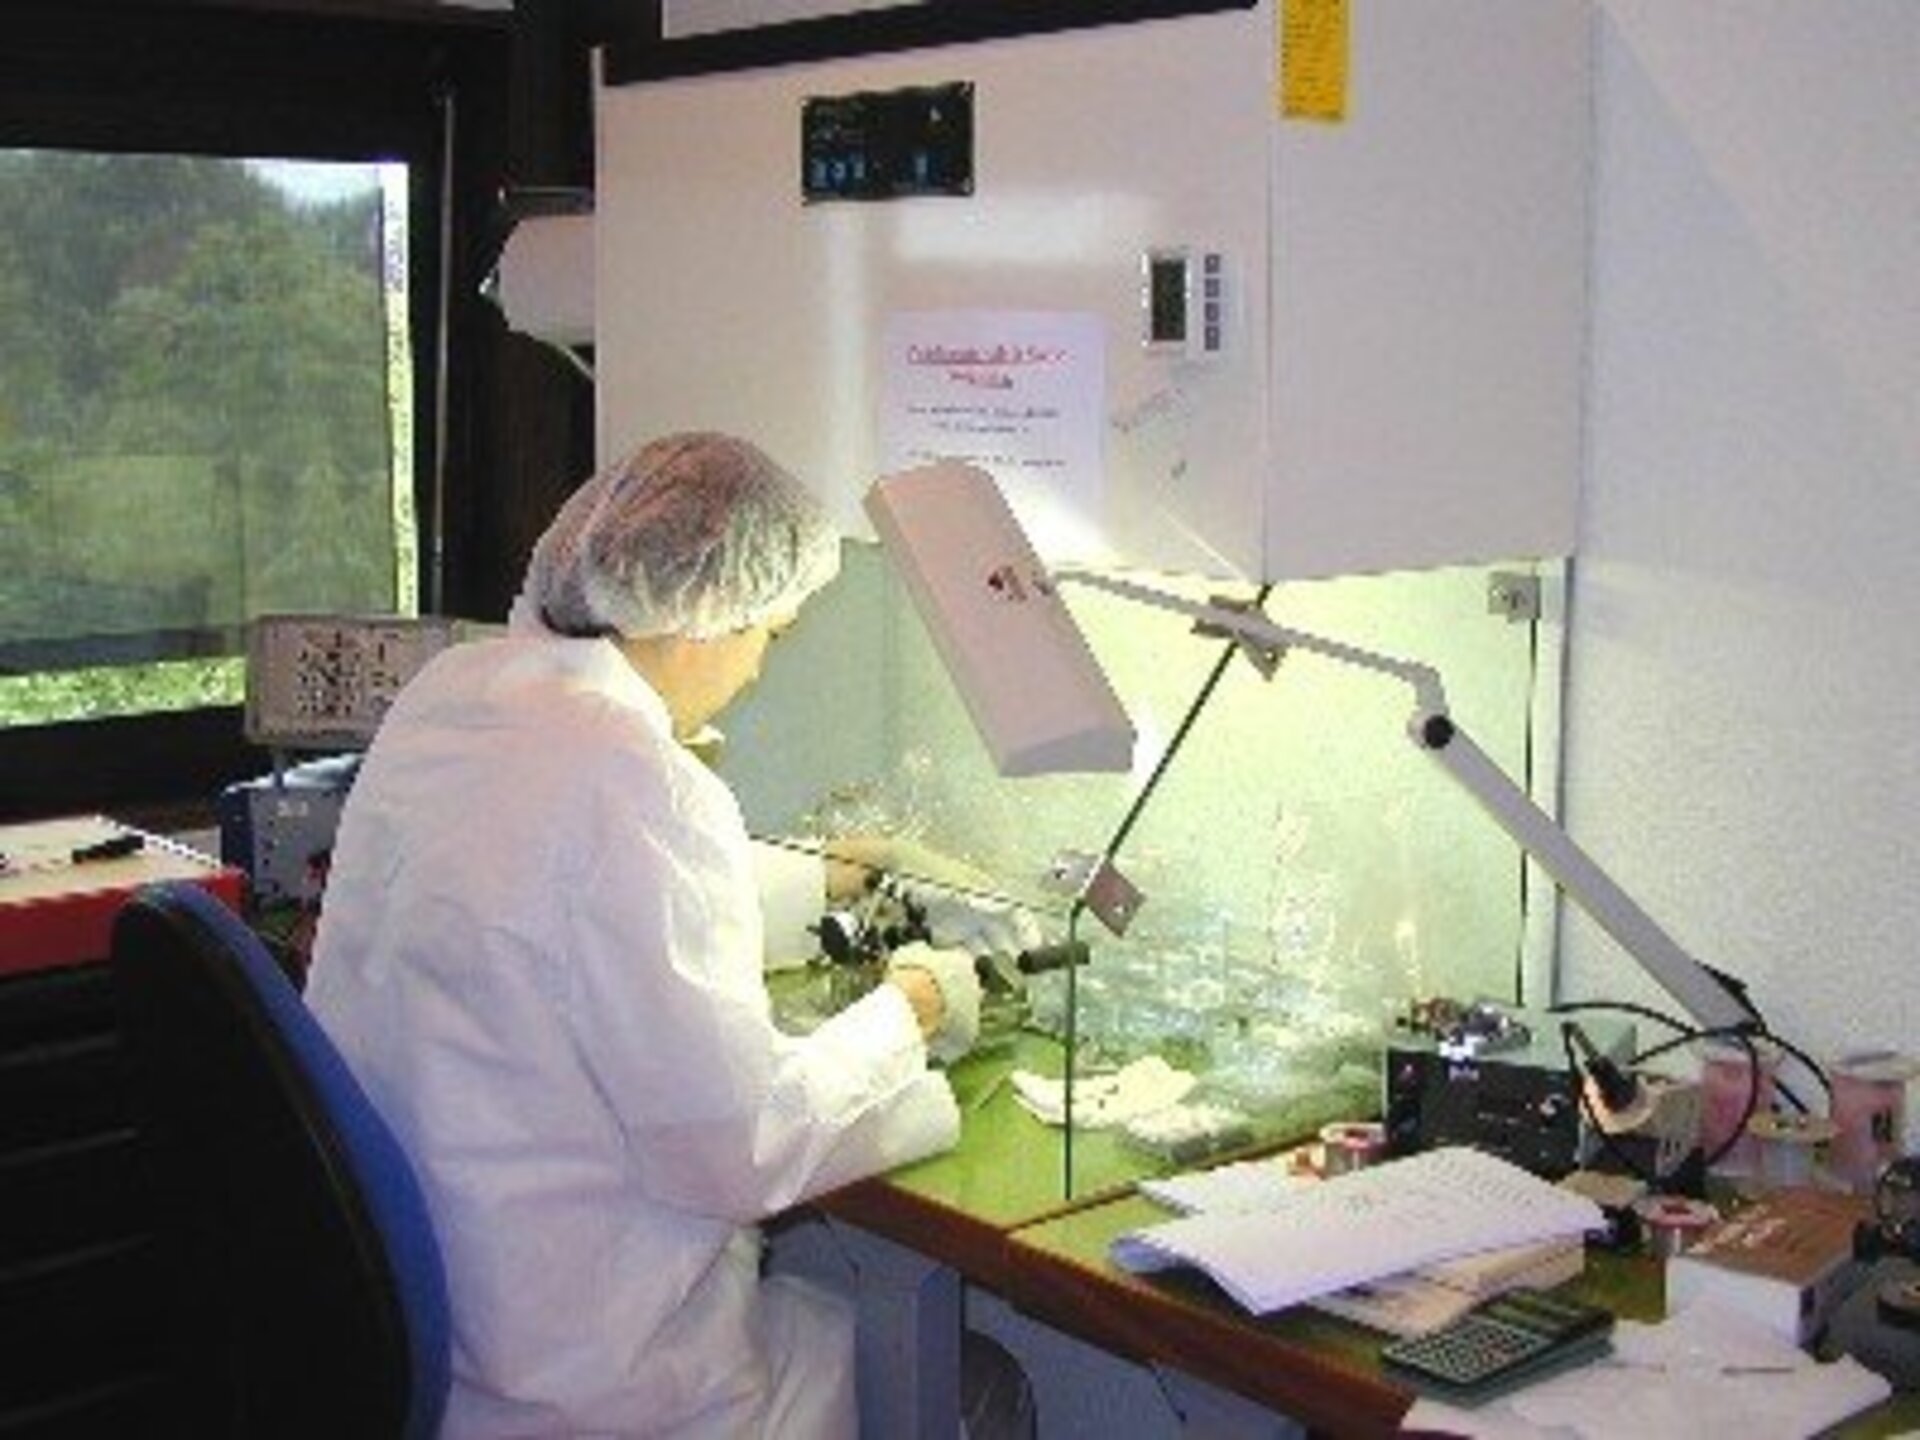 Testing in Cedrat Technologies’ laboratory